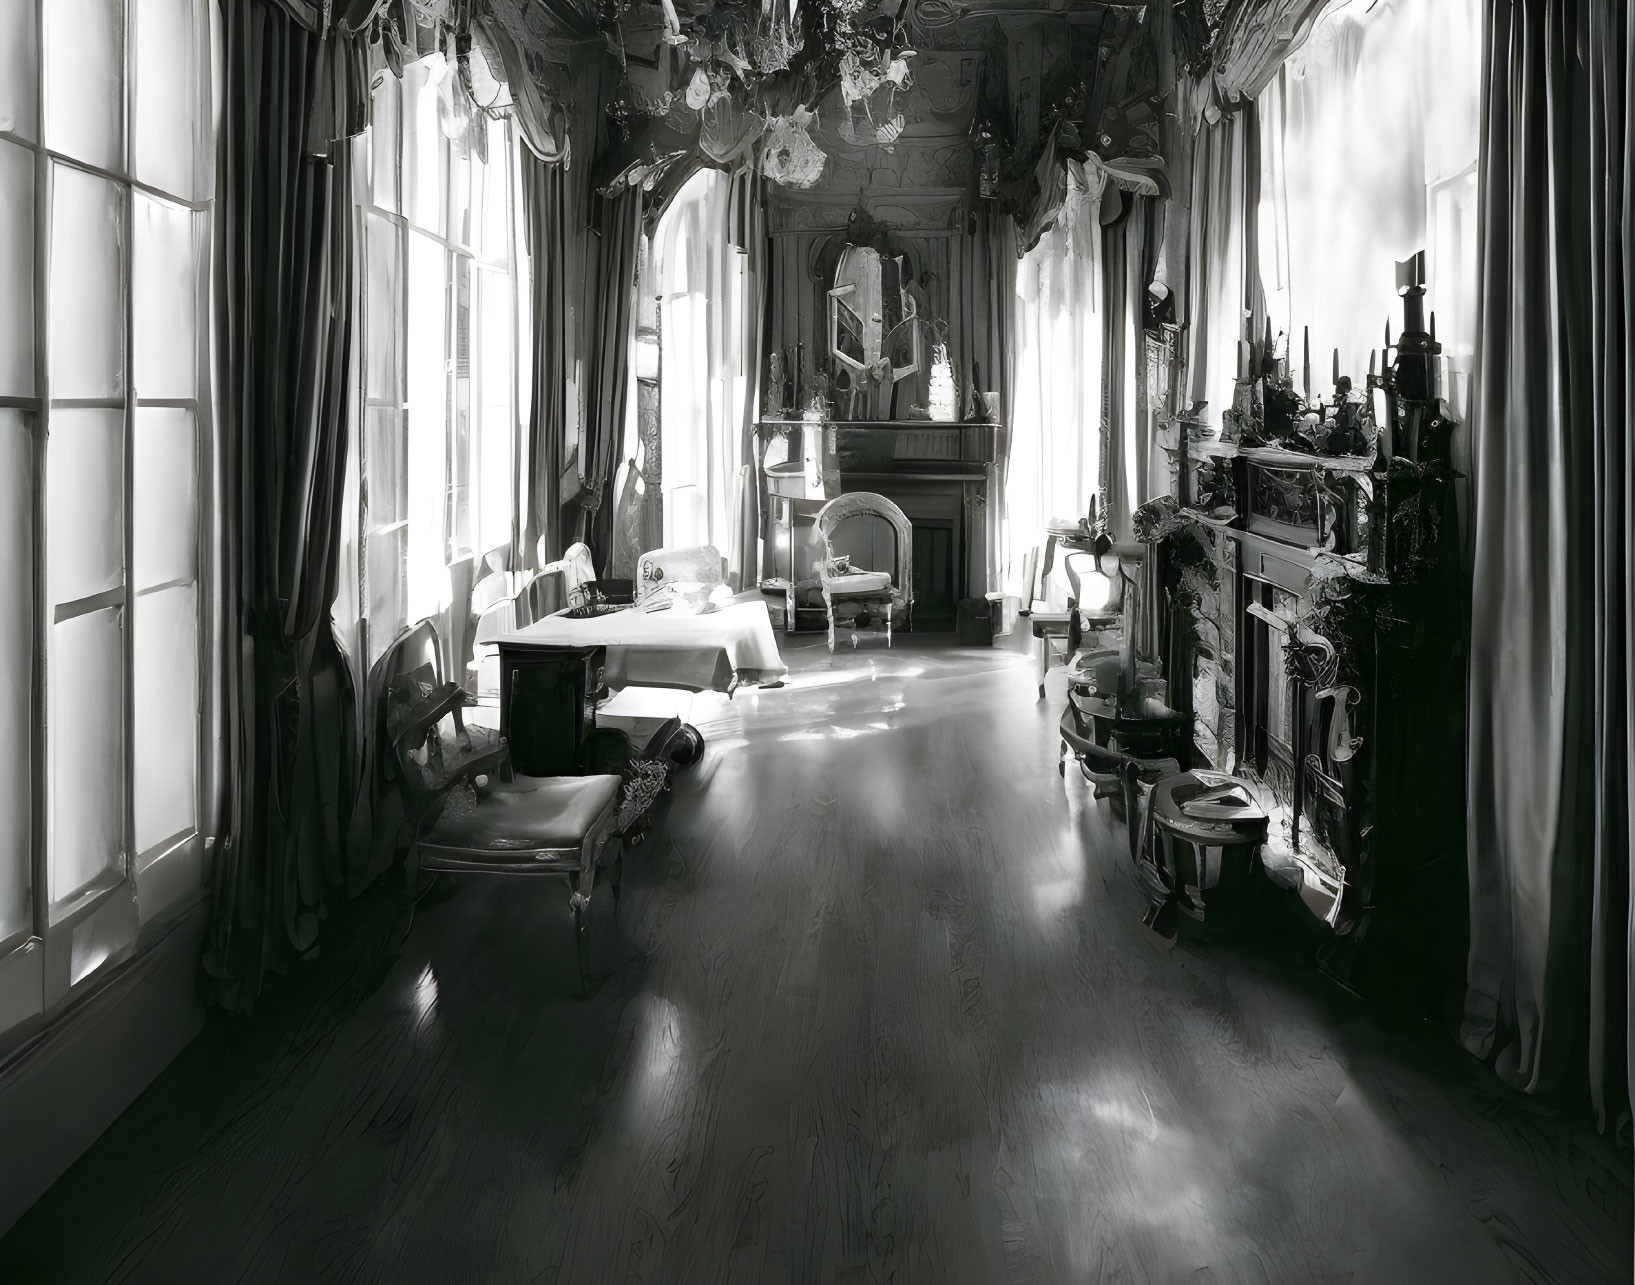 Servants quarters inside the mansion